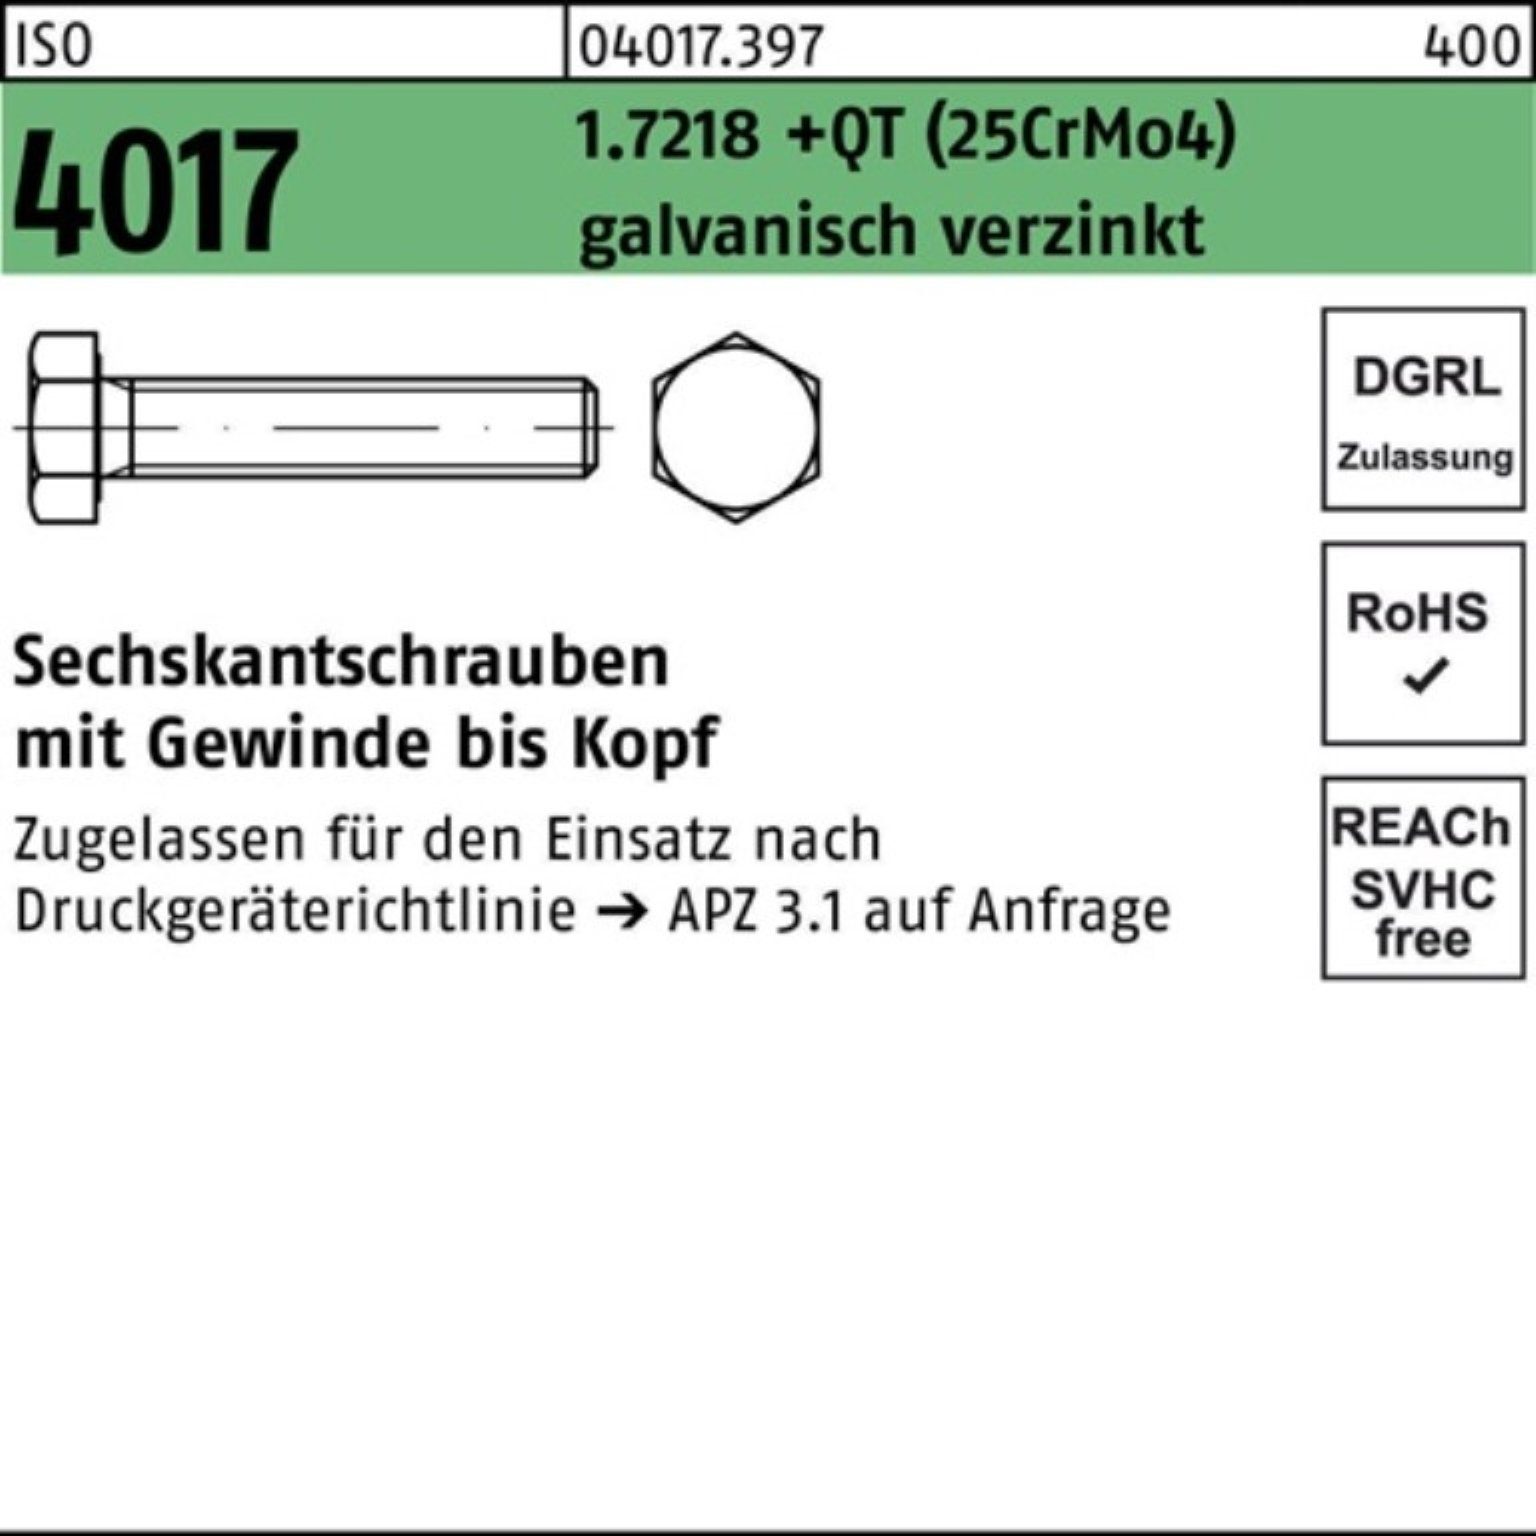 Bufab Sechskantschraube 100er Pack (25CrMo4) M30x100 ISO Sechskantschraube VG +QT 1.7218 4017